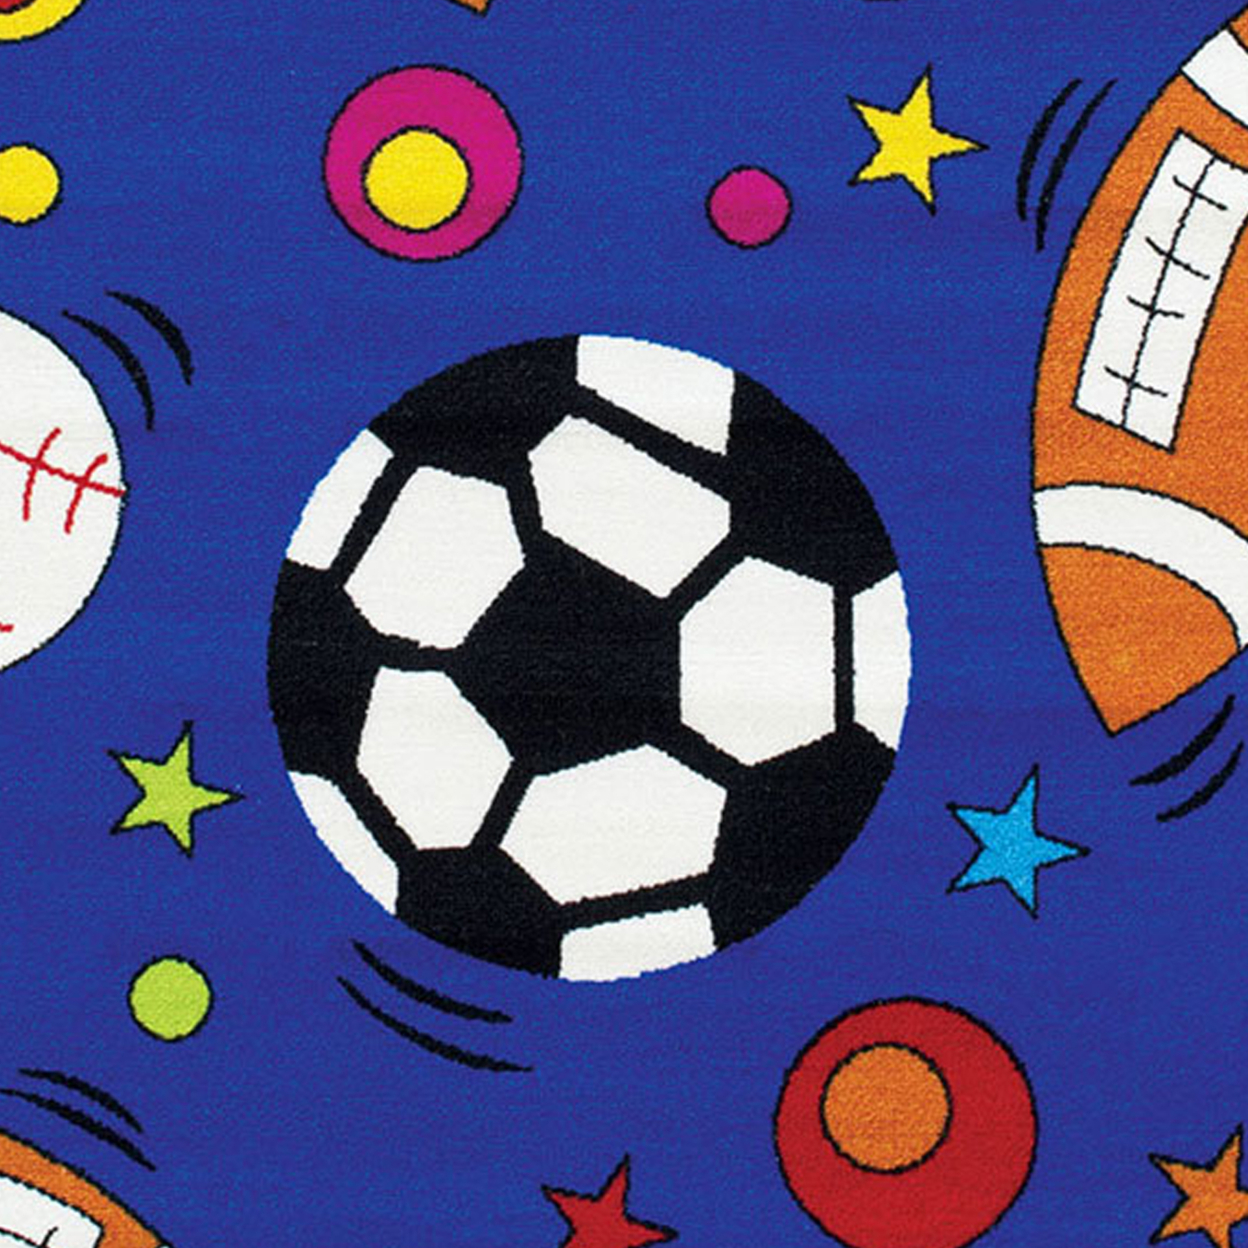 81 X 57 Inches Nylon Rug With Outdoor Sports Ball Print, Multicolor- Saltoro Sherpi